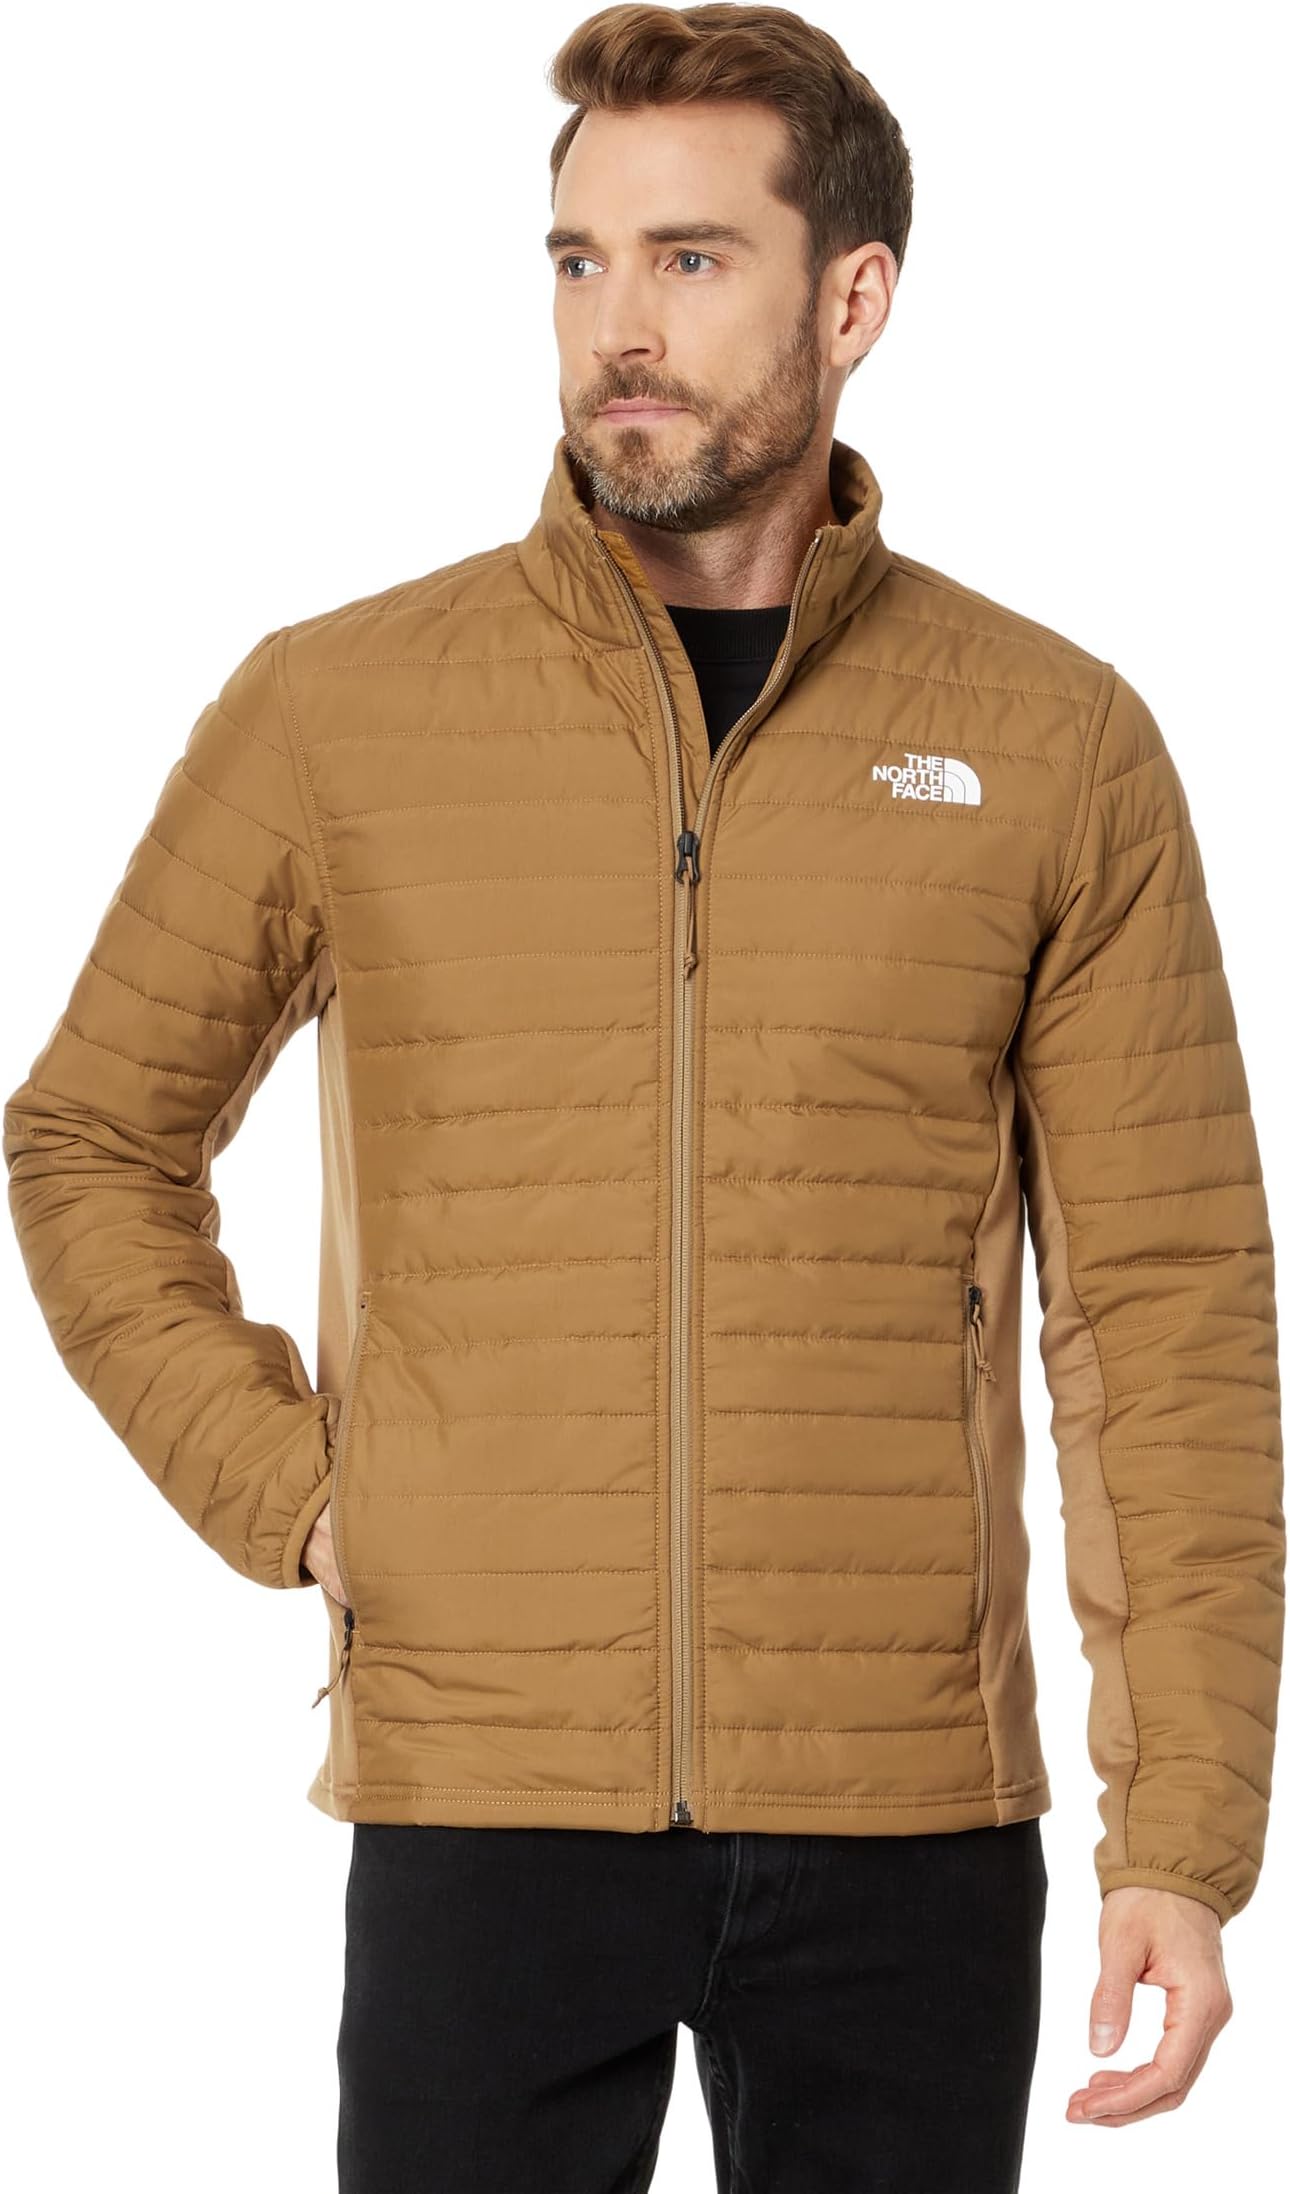 Куртка Canyonlands Hybrid Jacket The North Face, цвет Utility Brown шорты из рипстопа 7 дюймов класс v the north face цвет utility brown